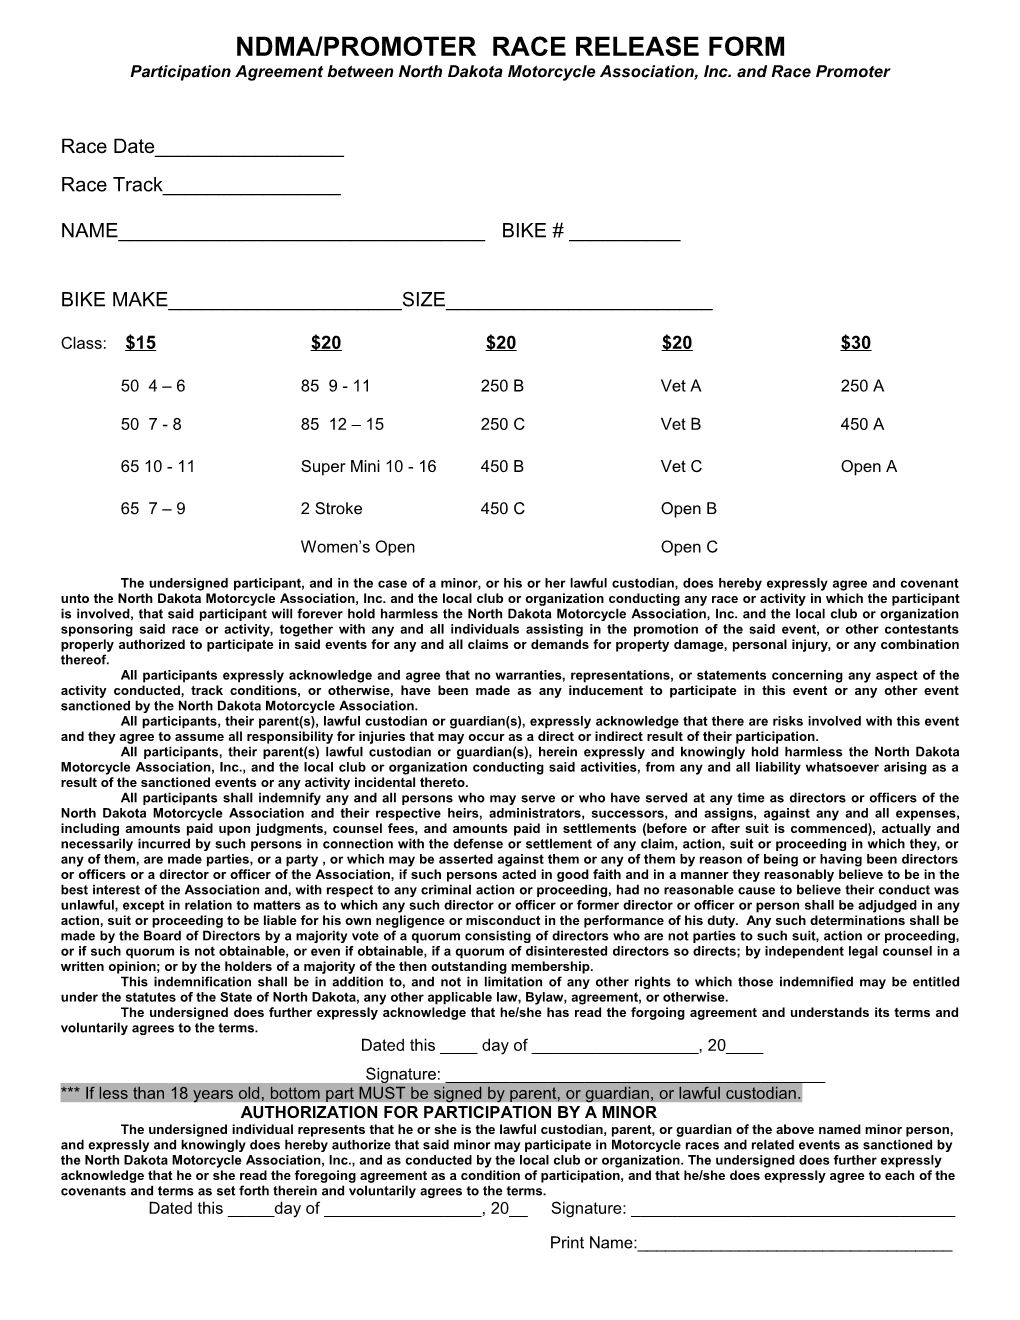 2009 Ndma/Promoter Race Release Form